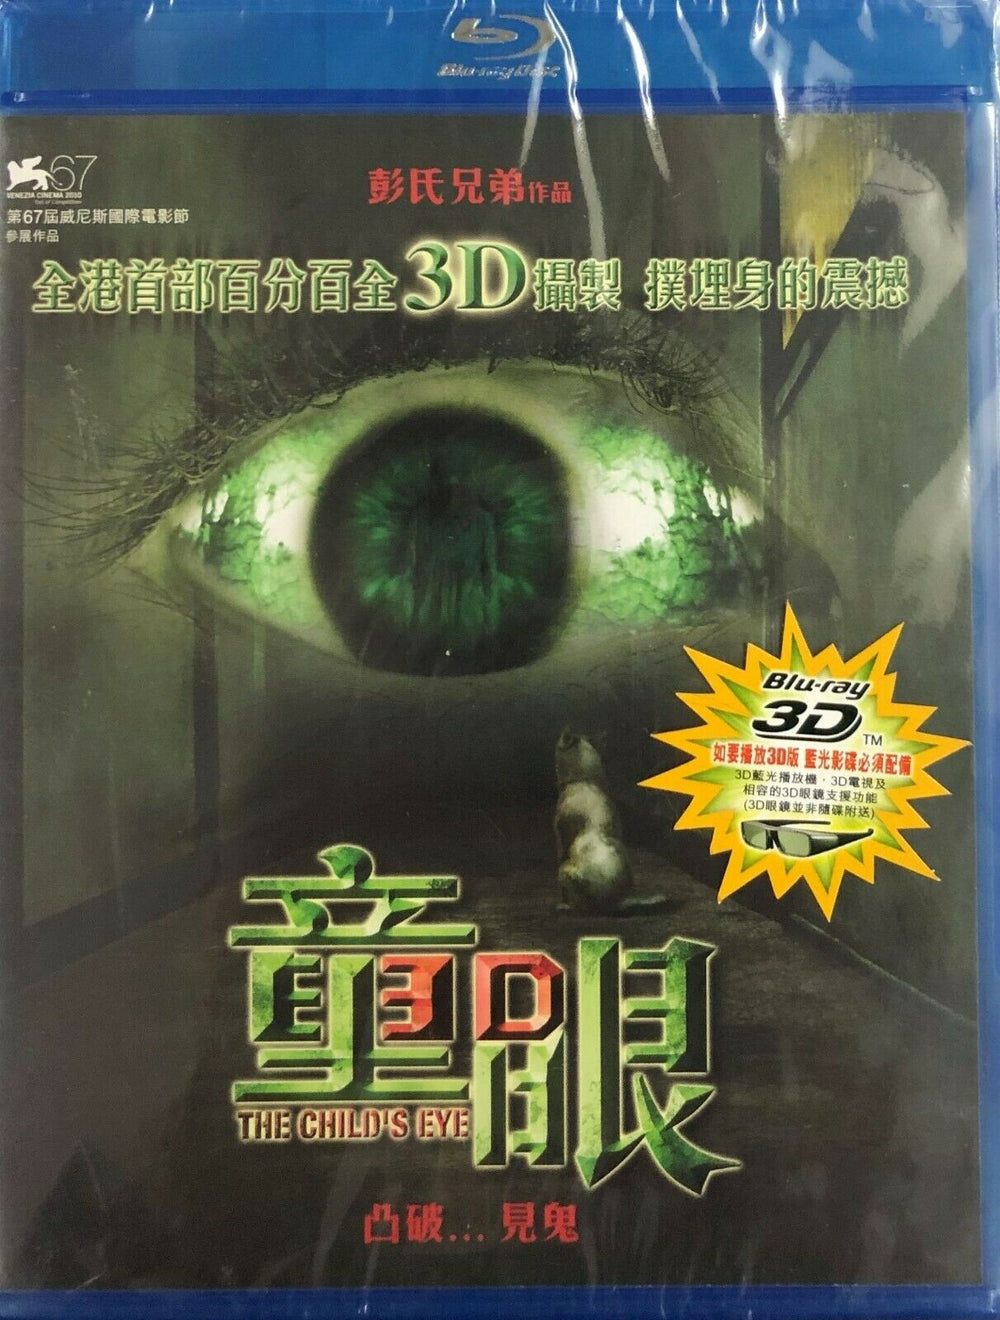 The Child's Eye 童眼3D 2010 (H.K) 2d + 3d BLU-RAY with English Subtitles (Region A)